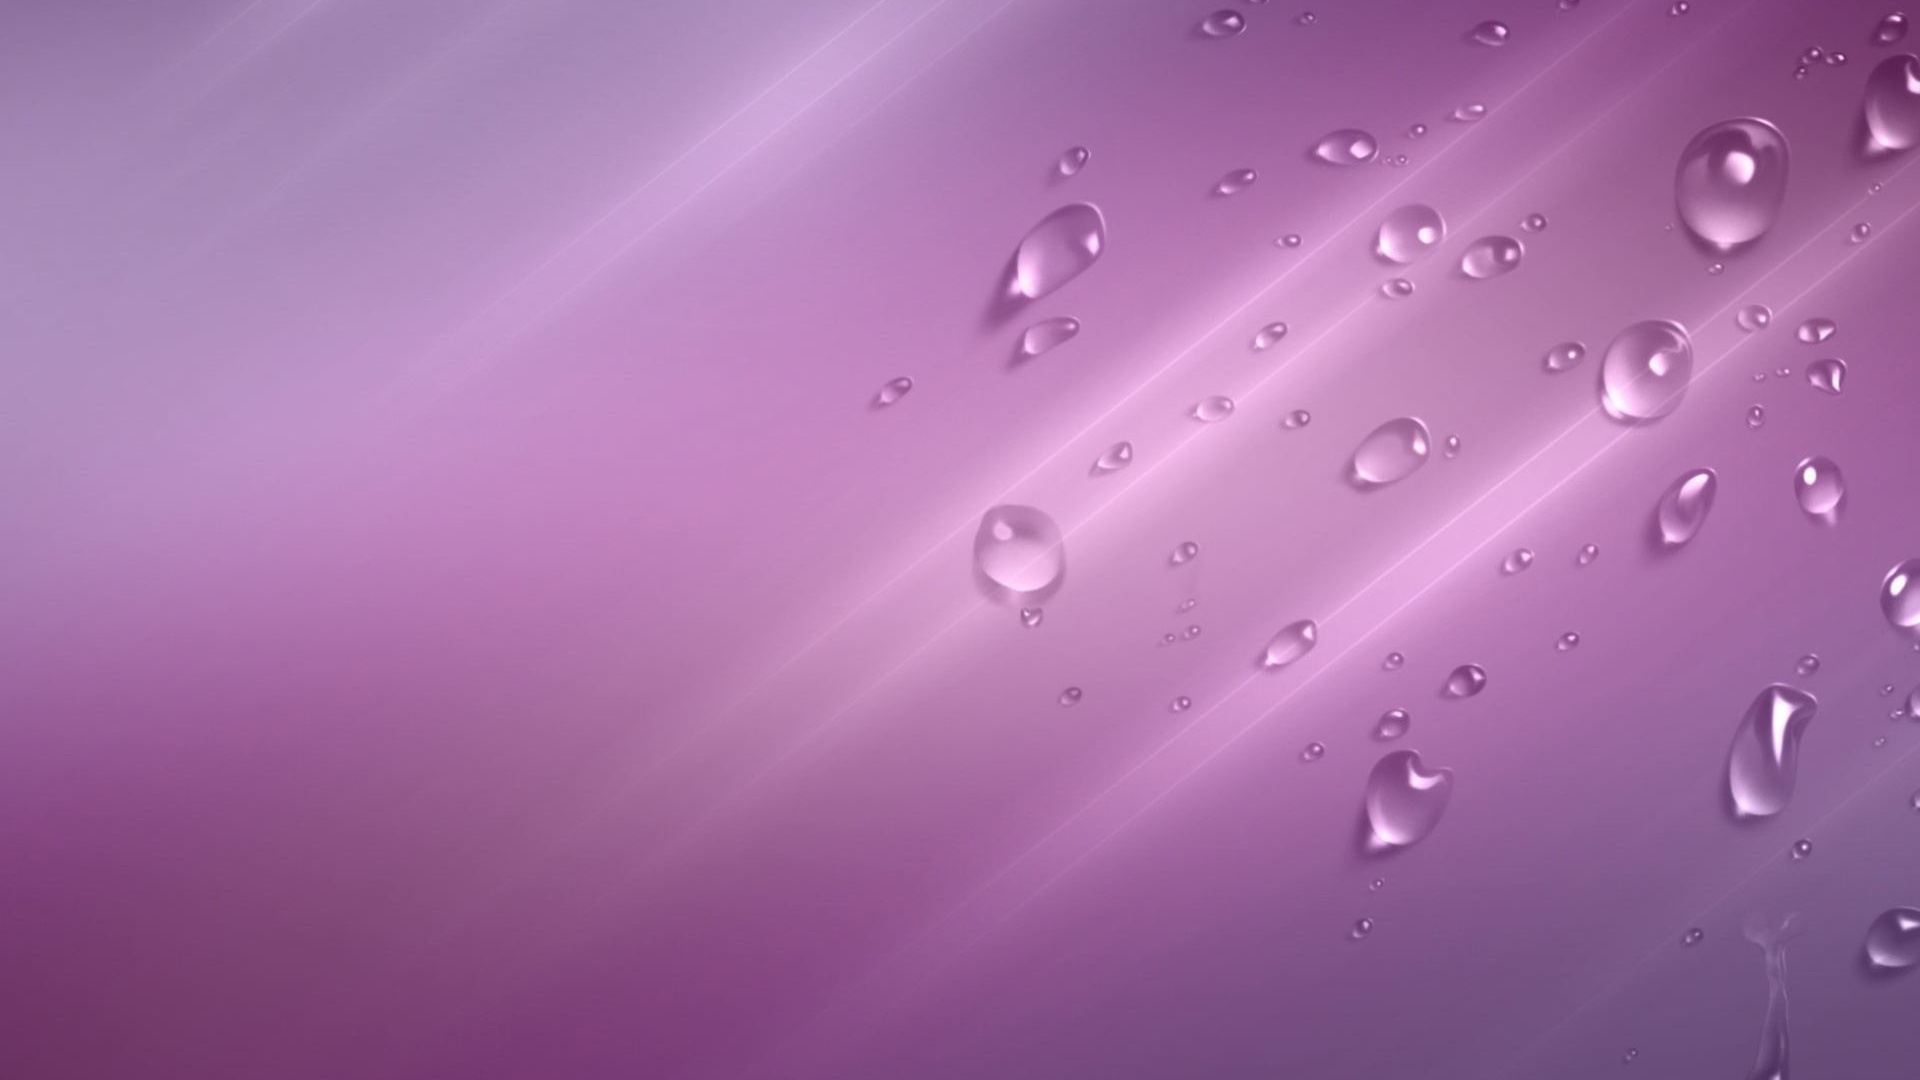 Image Background Purple Plain Colorful